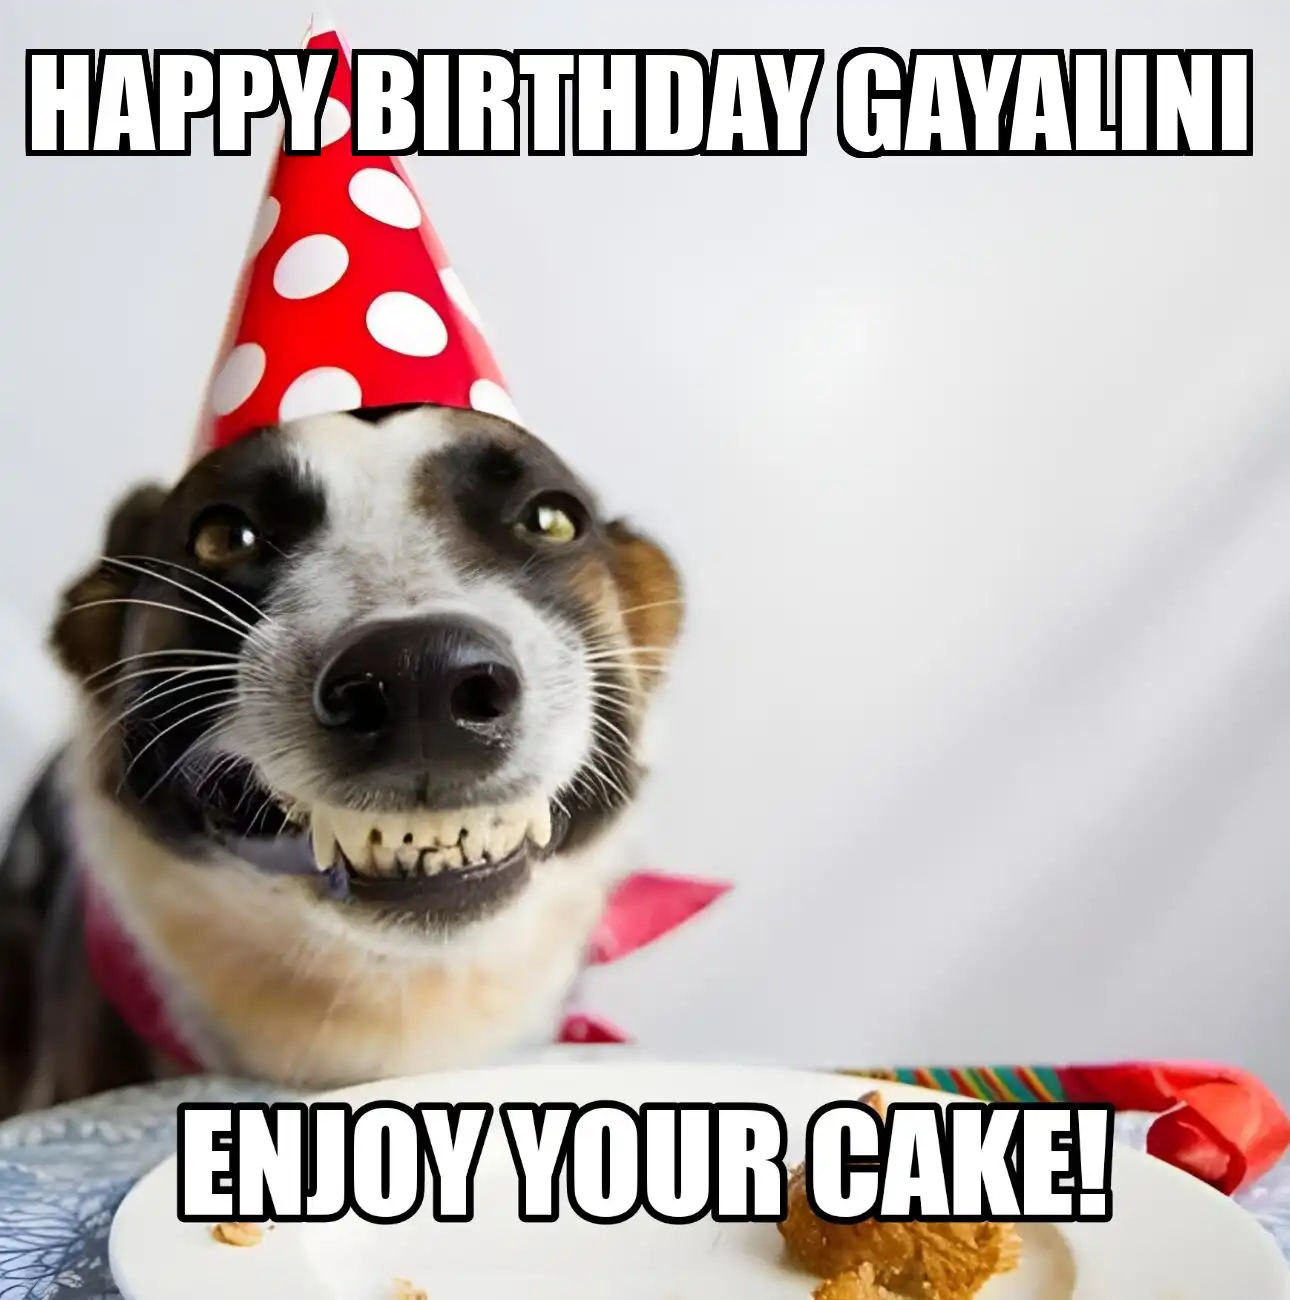 Happy Birthday Gayalini Enjoy Your Cake Dog Meme